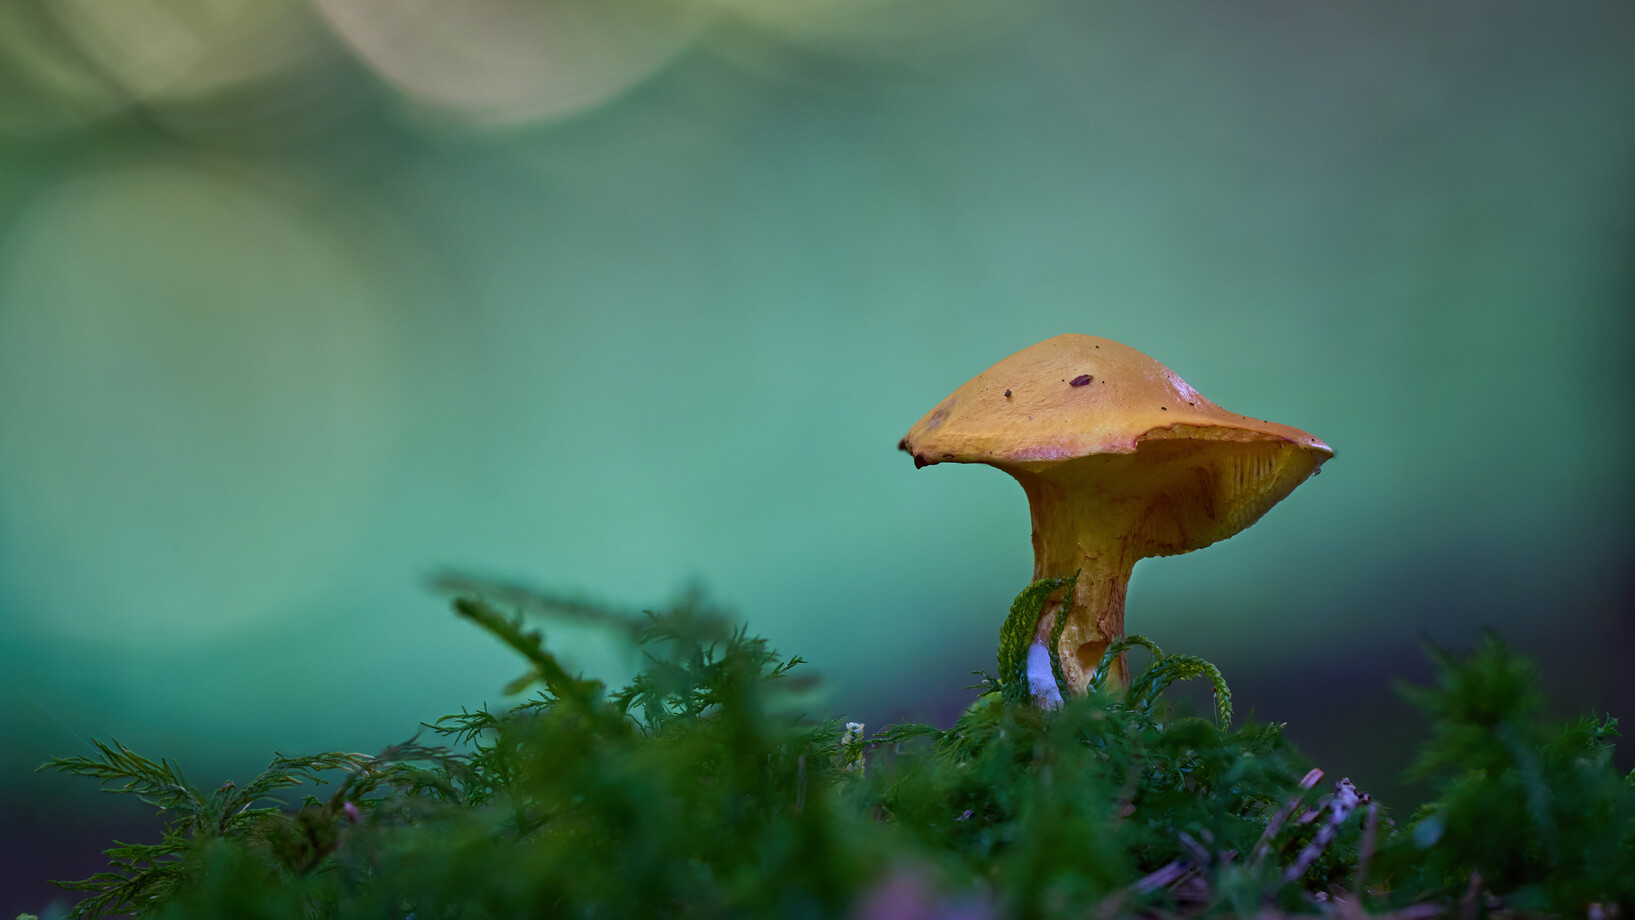 Close up of a mushroom